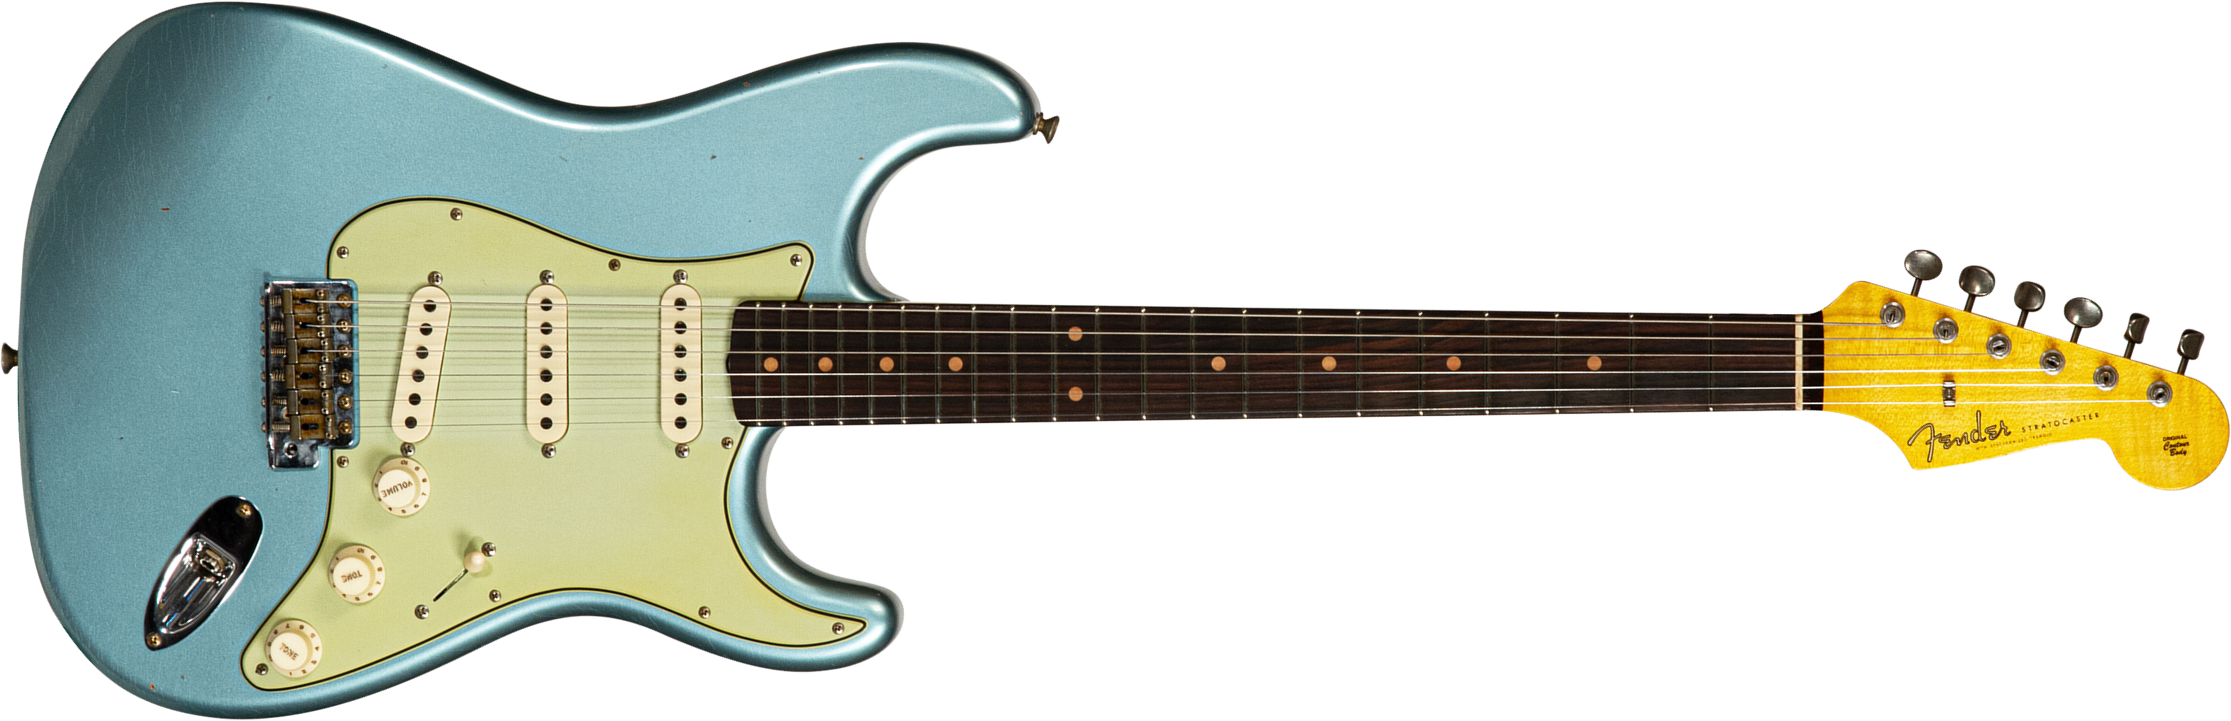 Fender Custom Shop Strat 1959 3s Trem Rw #cz566857 - Journeyman Relic Teal Green Metallic - Elektrische gitaar in Str-vorm - Main picture